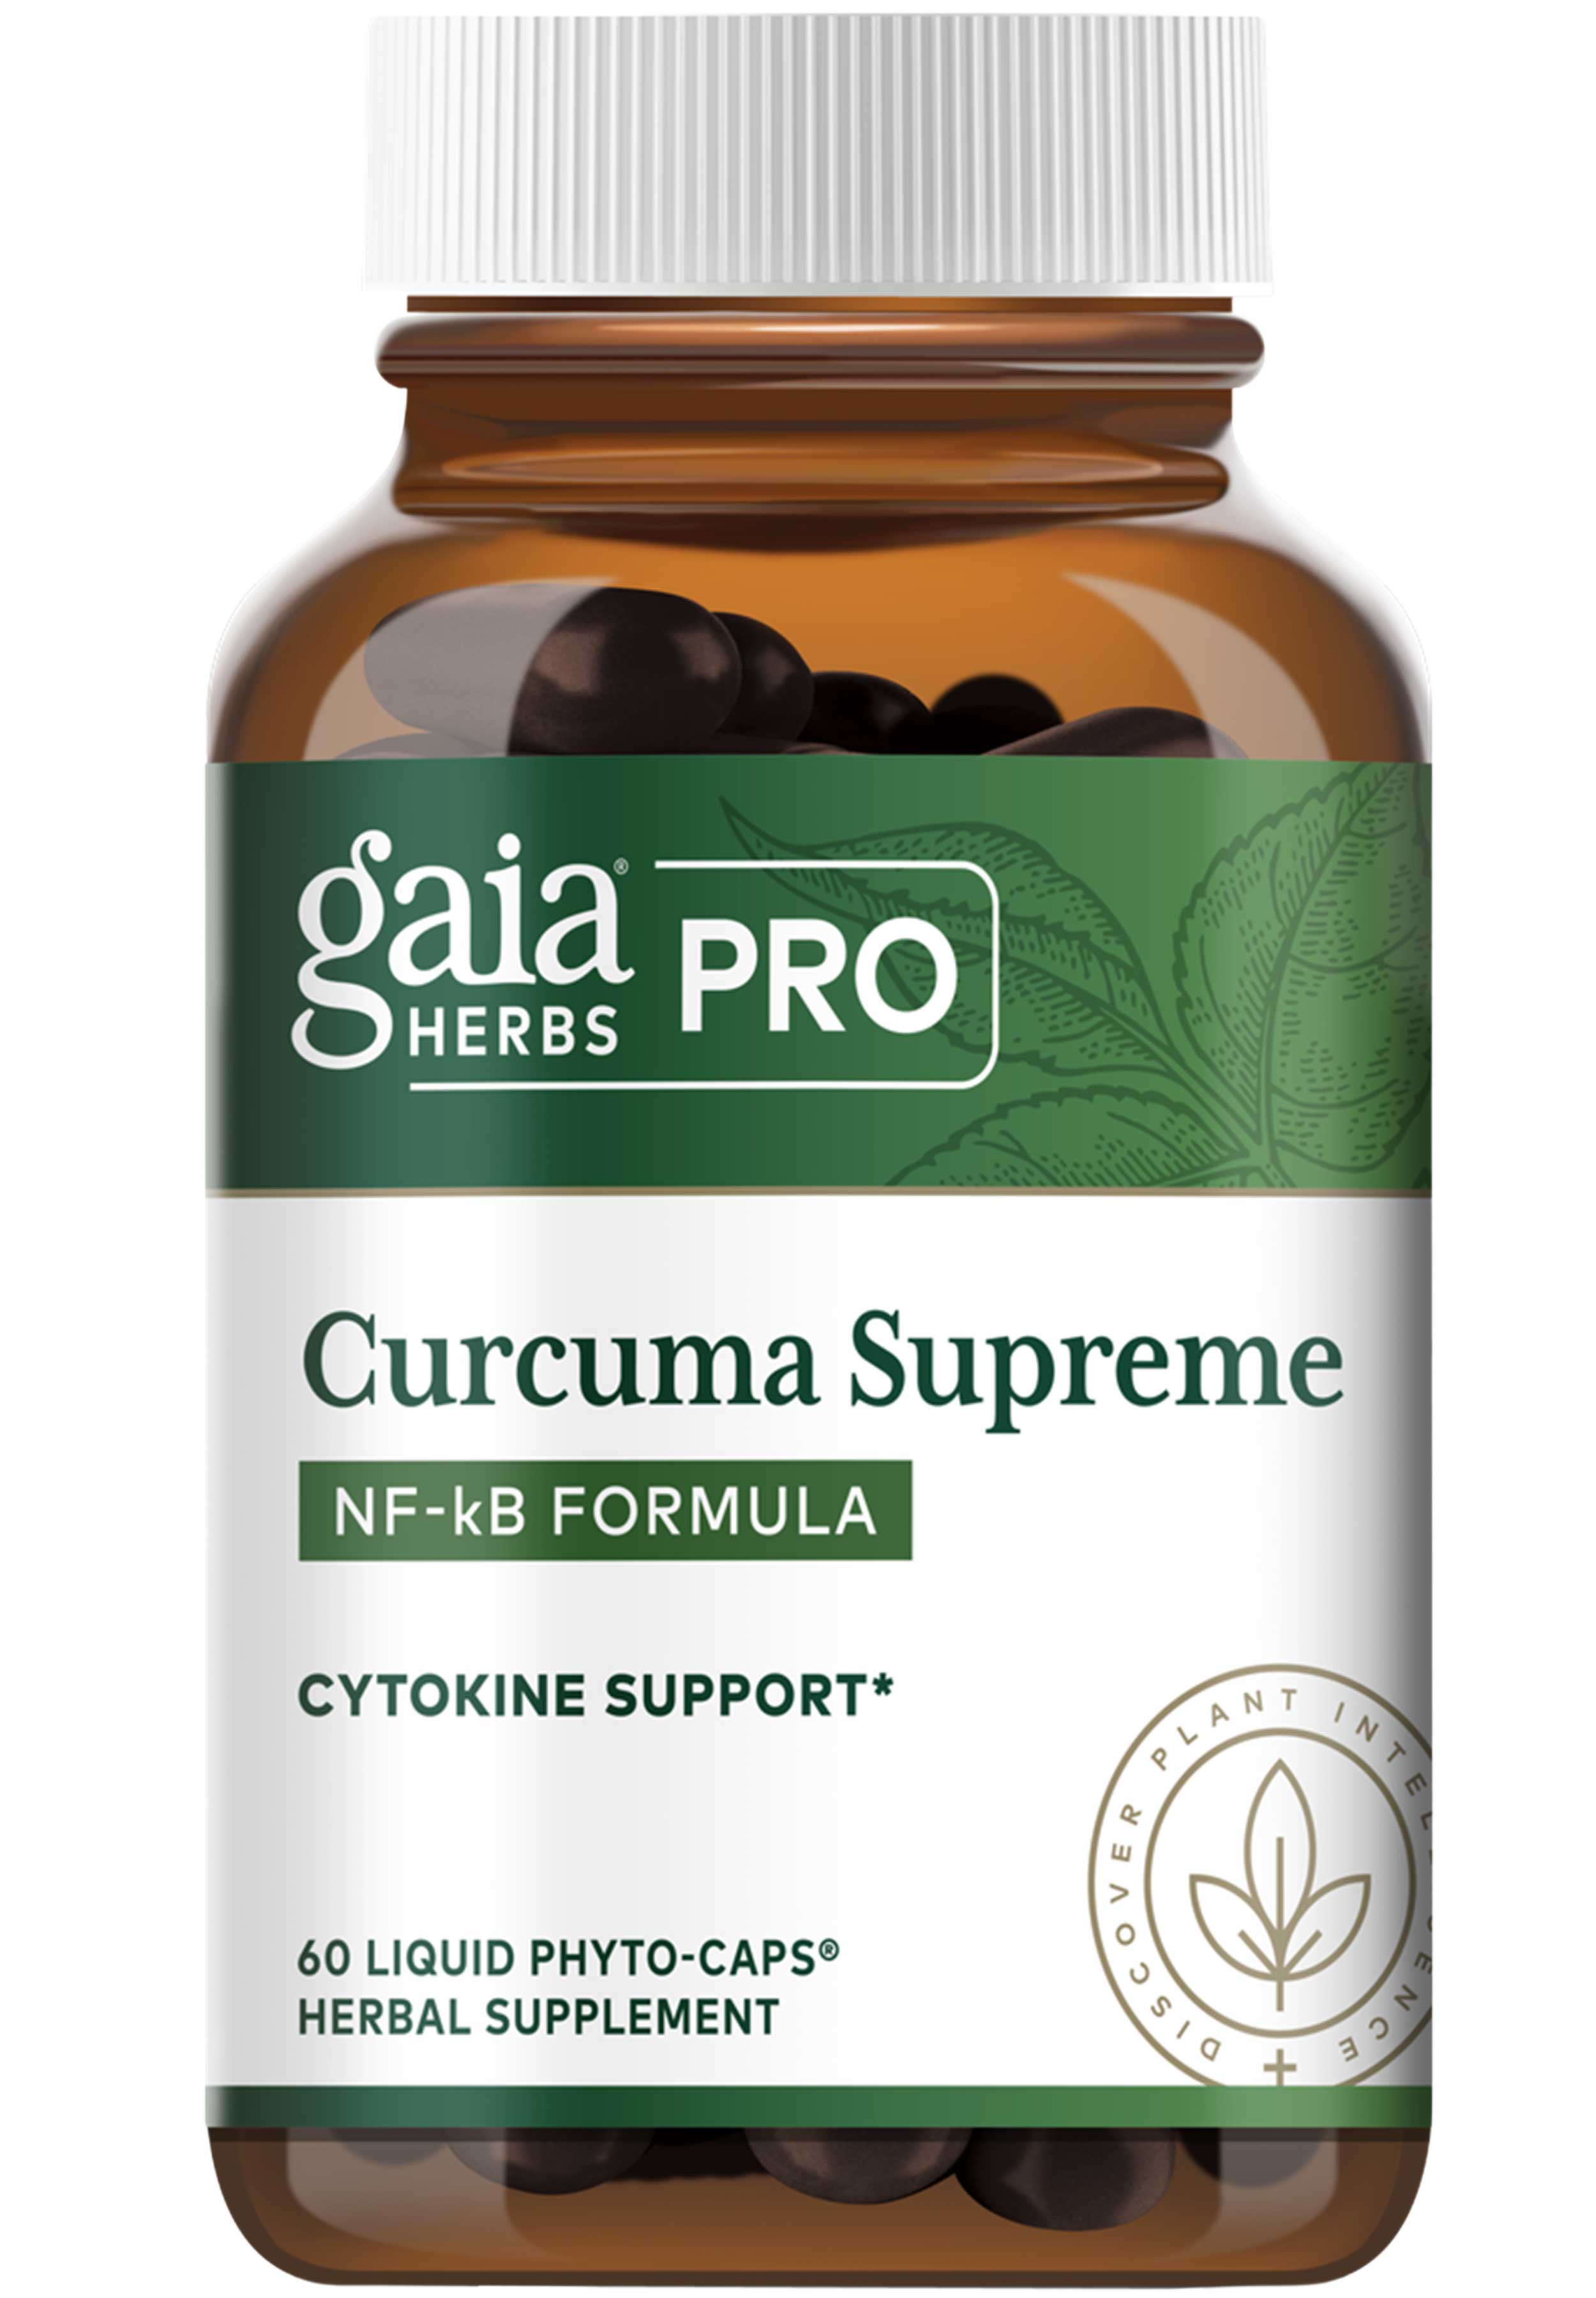 Gaia Herbs Professional Solutions Curcuma Supreme NF-kB Formula (formerly Curcuma NF-kB: Turmeric Supreme)